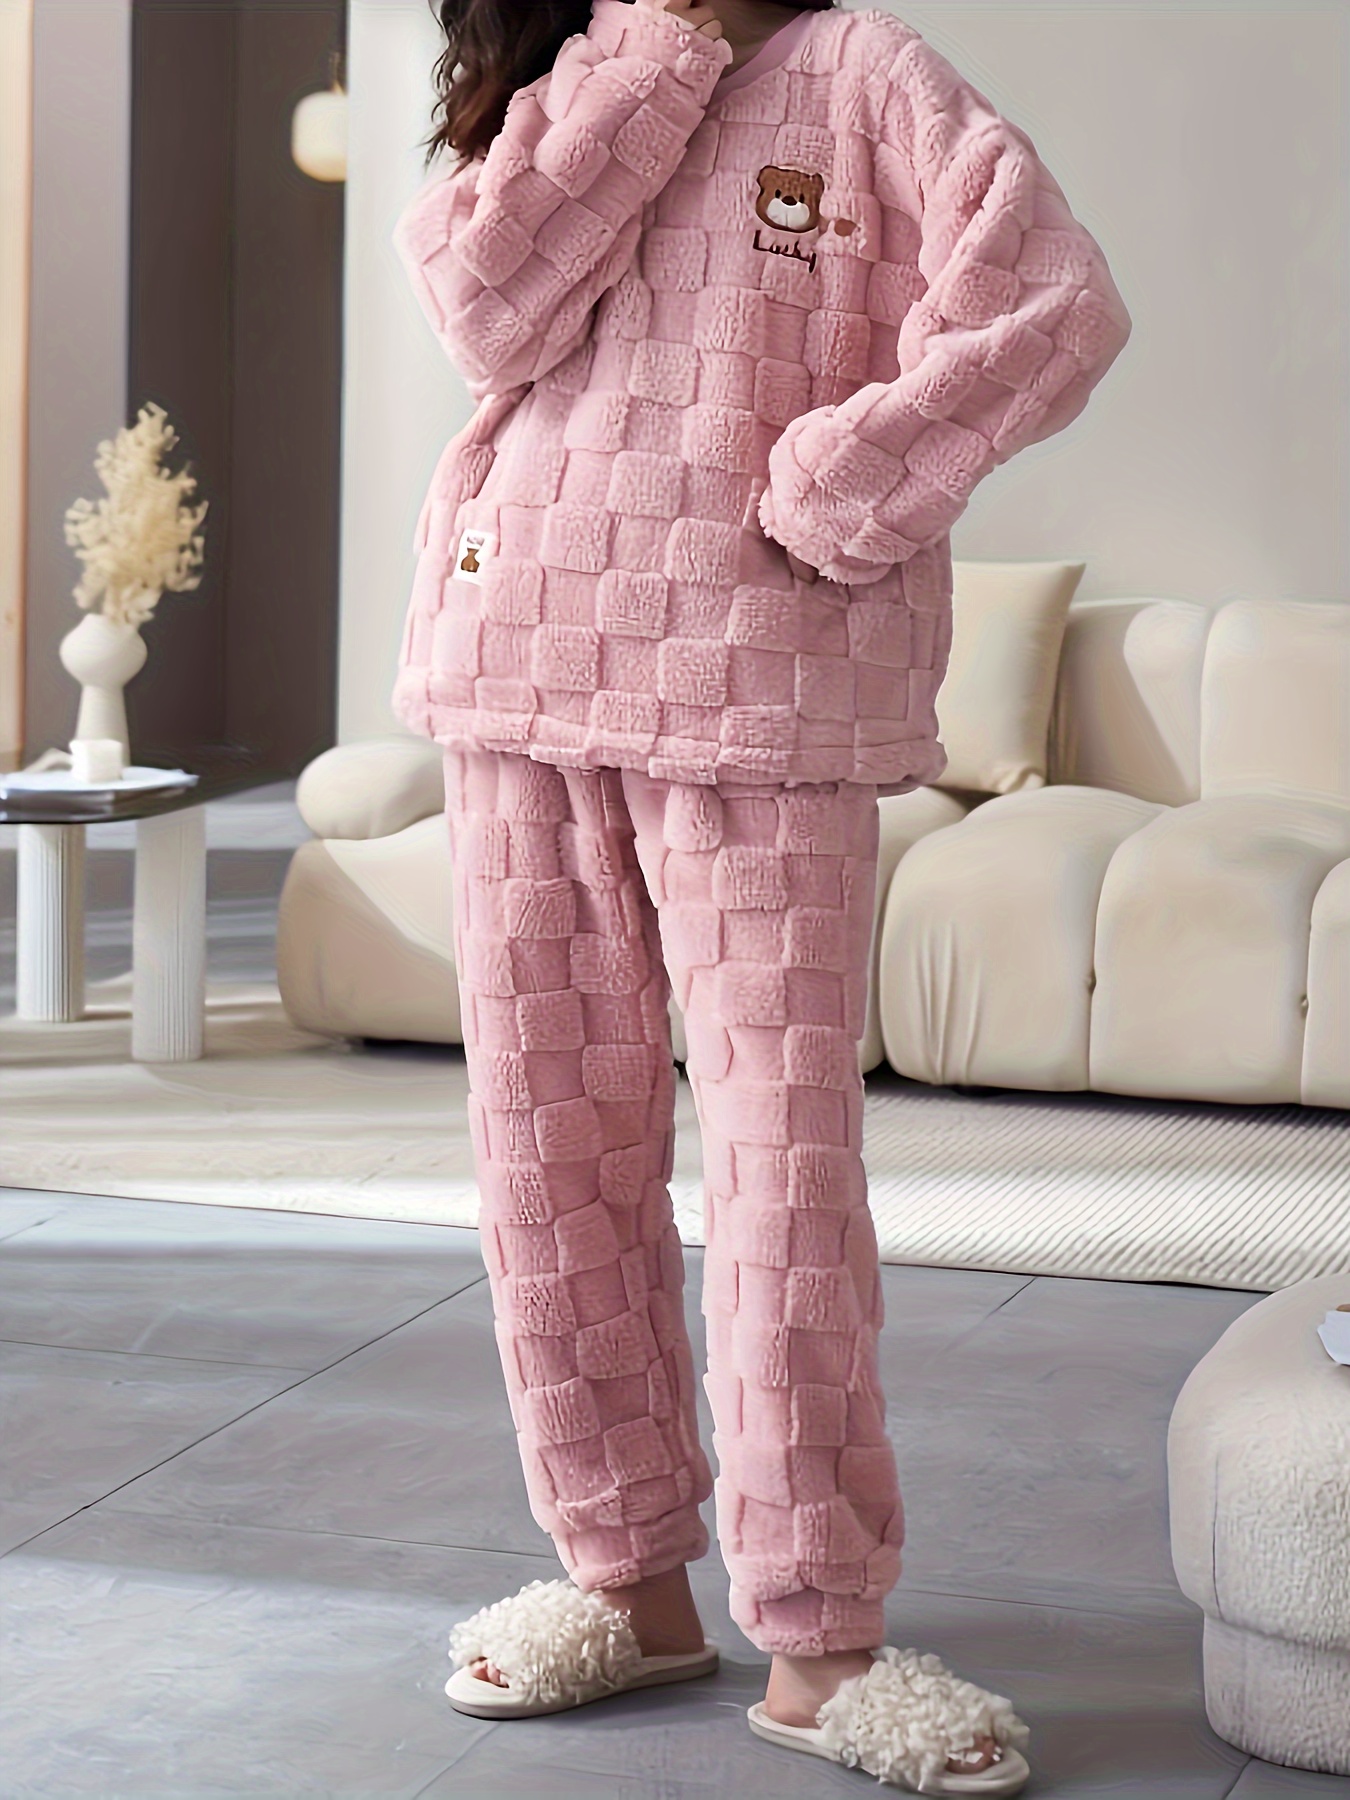 Cartoon Bear Fuzzy Pajama Set, Long Sleeve Crew Neck Top & Elastic  Waistband Pants, Women's Sleepwear & Loungewear